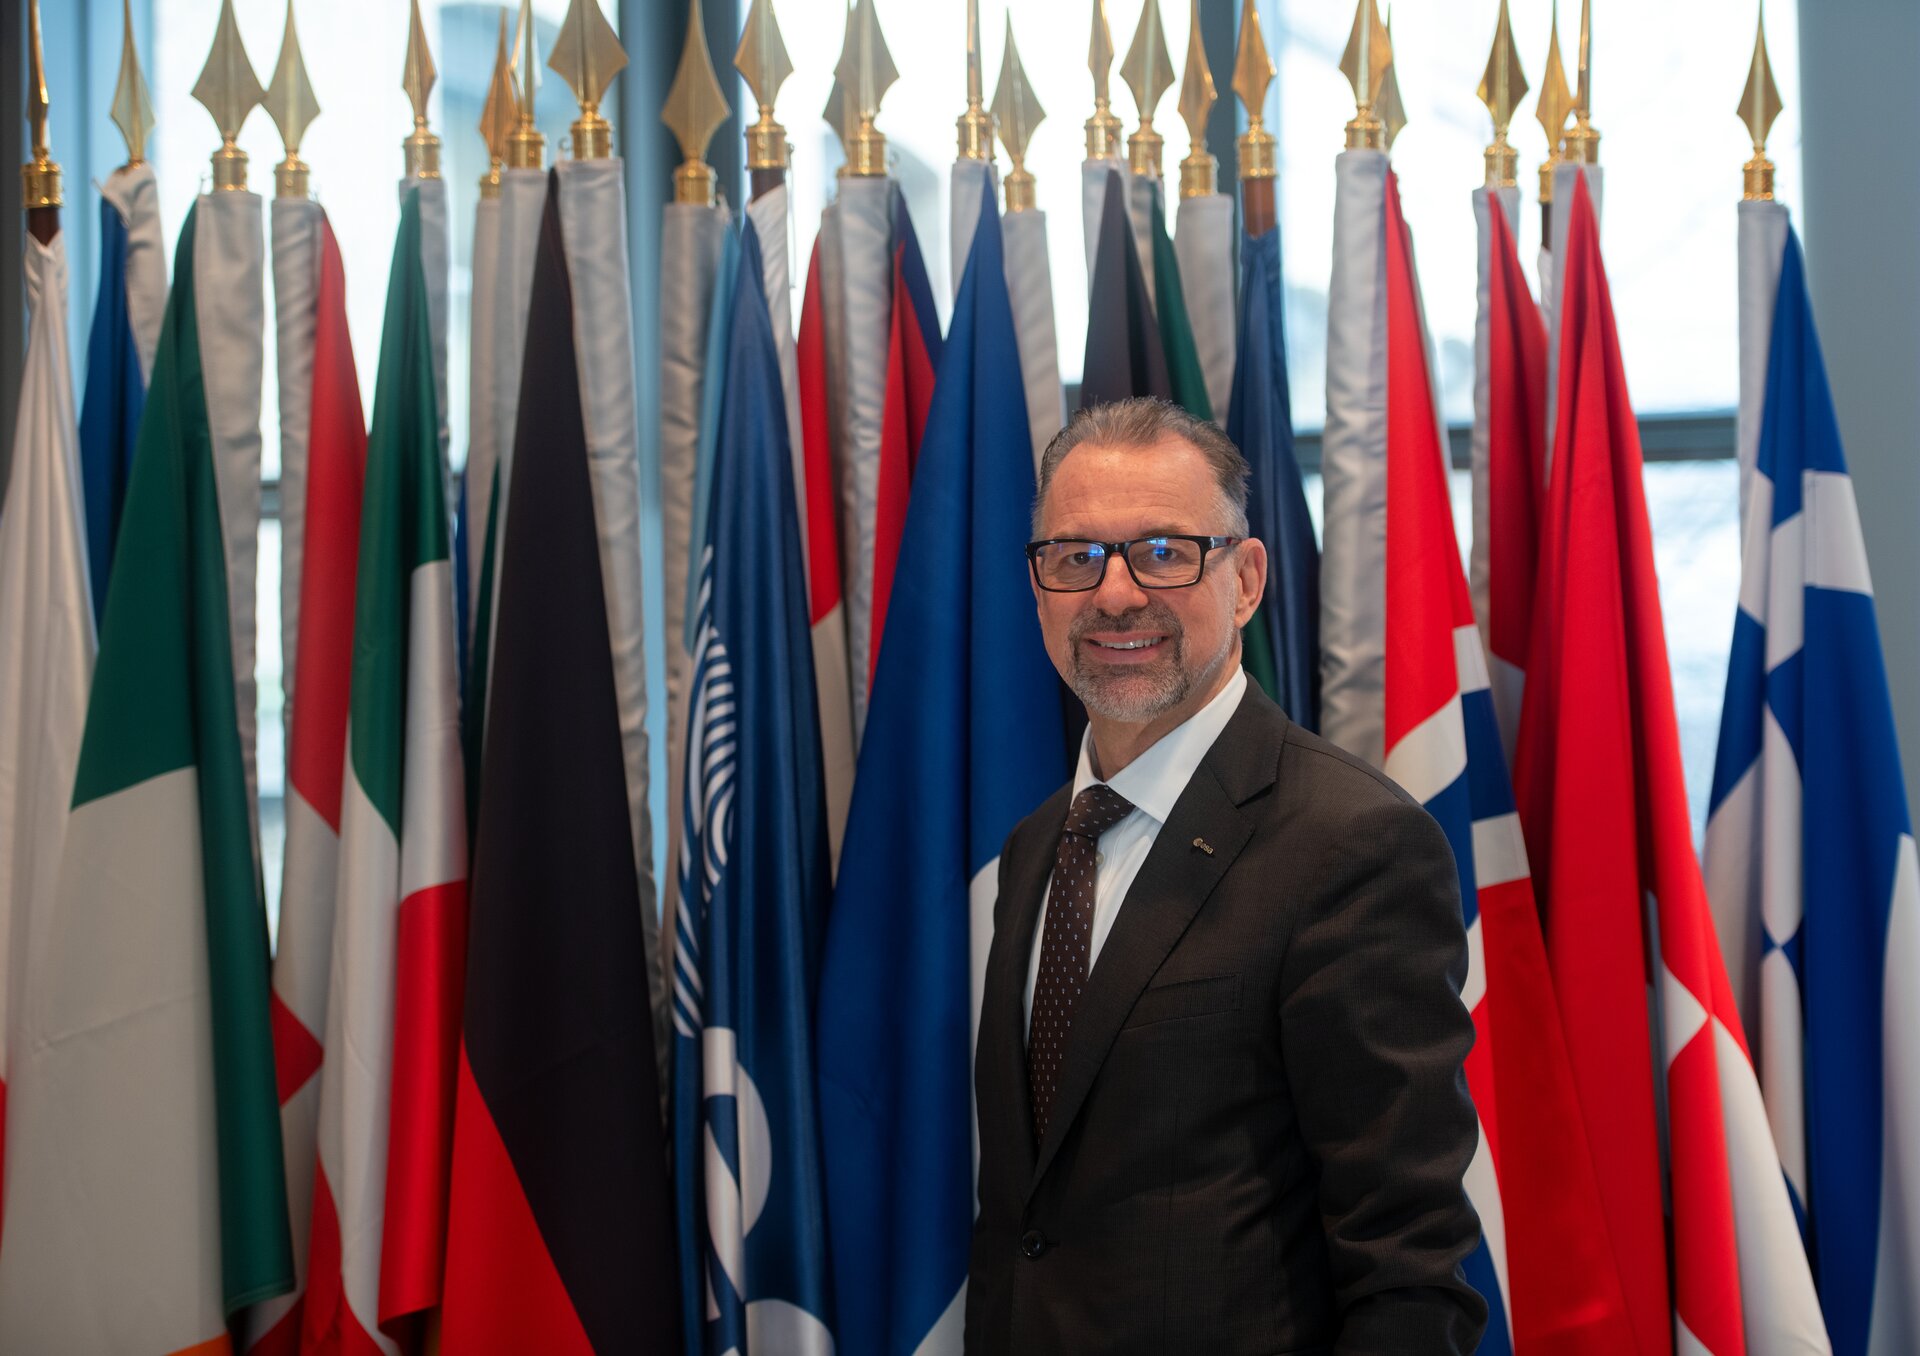 Josef Aschbacher is new ESA Director General